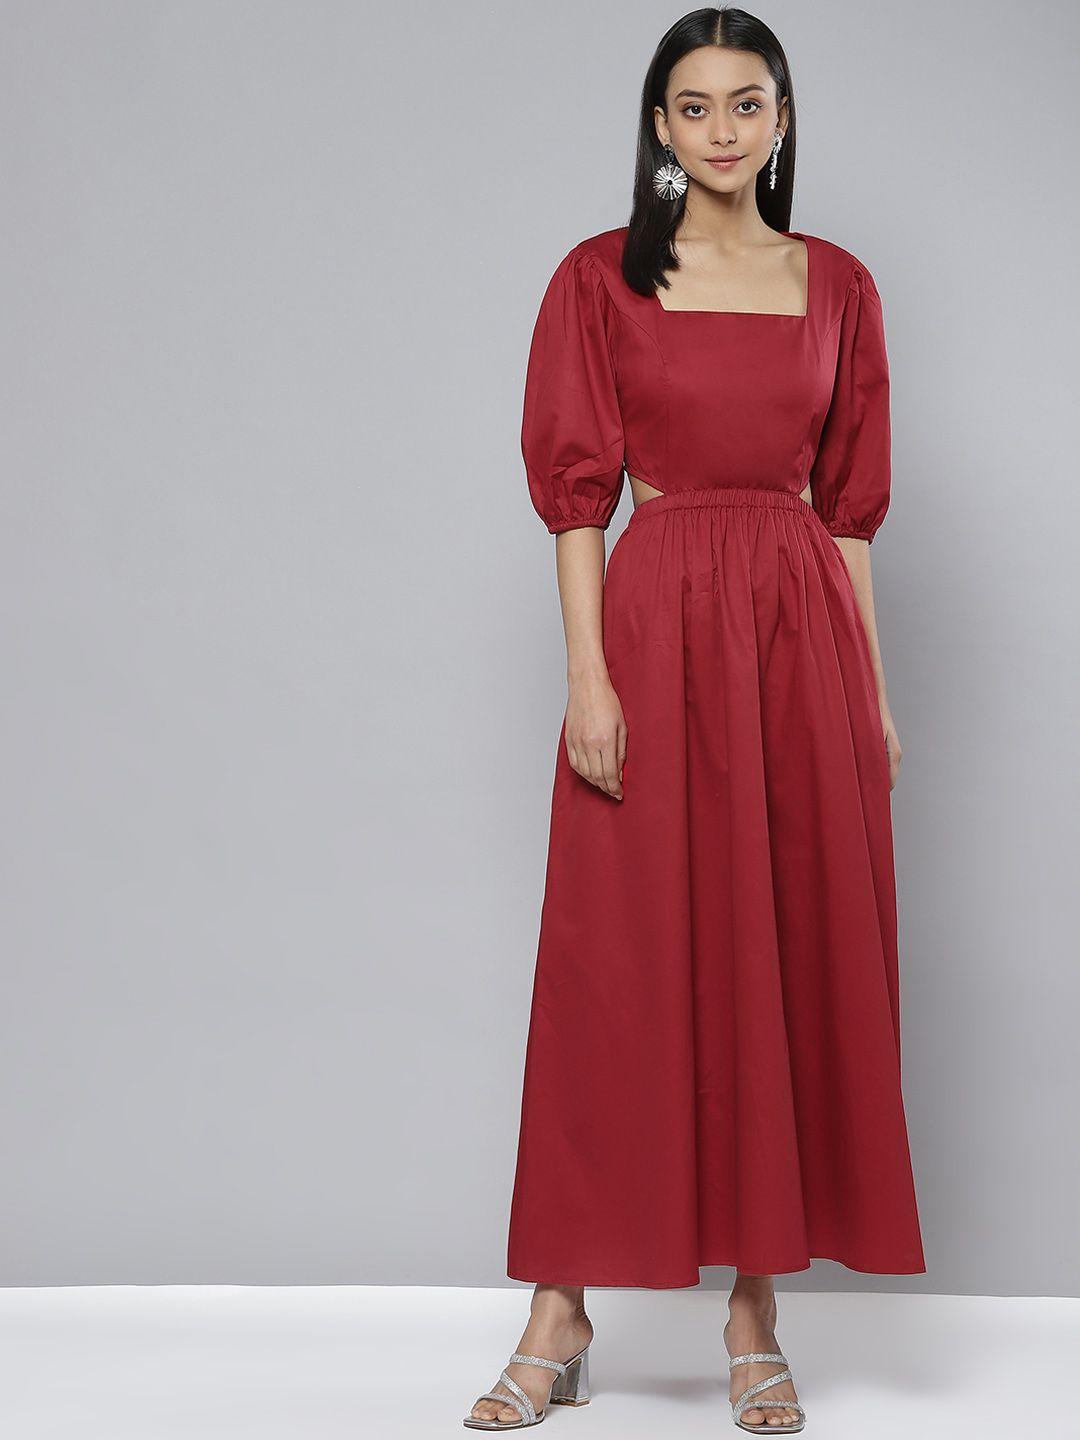 femella red formal maxi dress